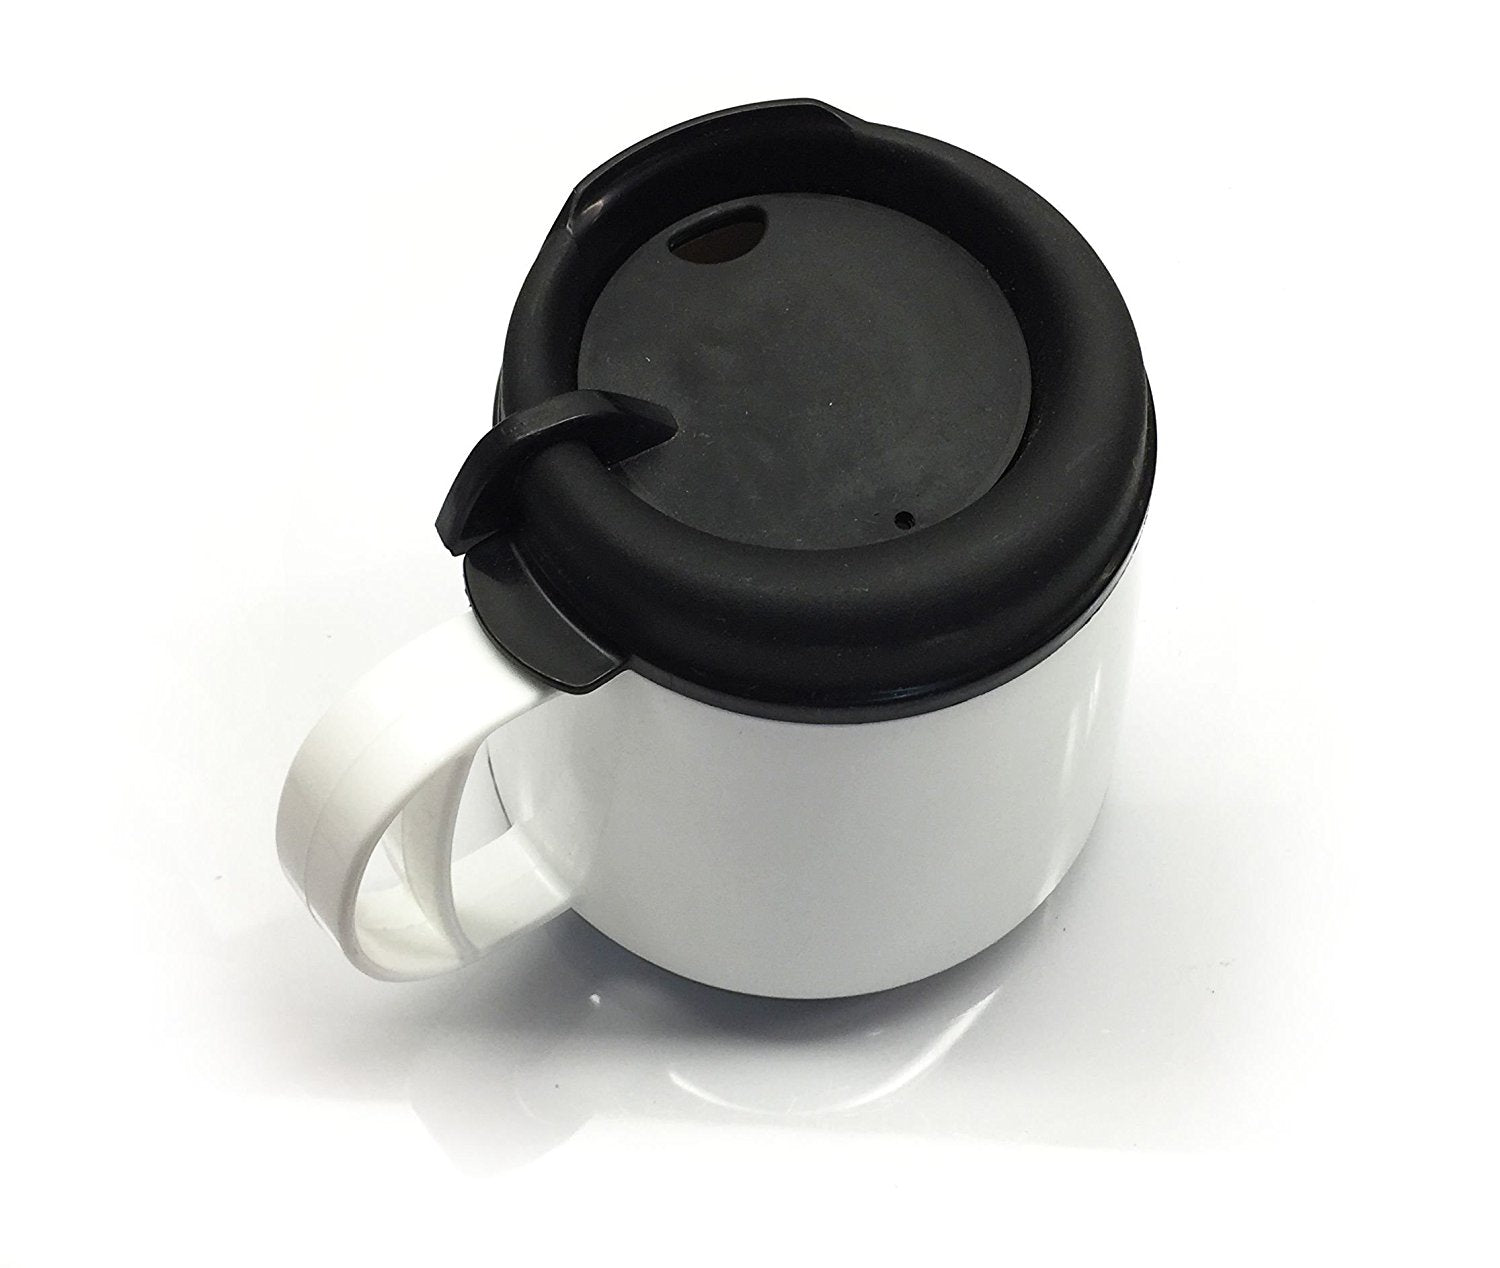 20oz. Foam Insulated Wide Body Thermoserv Mug (WHITE) - Buy Right